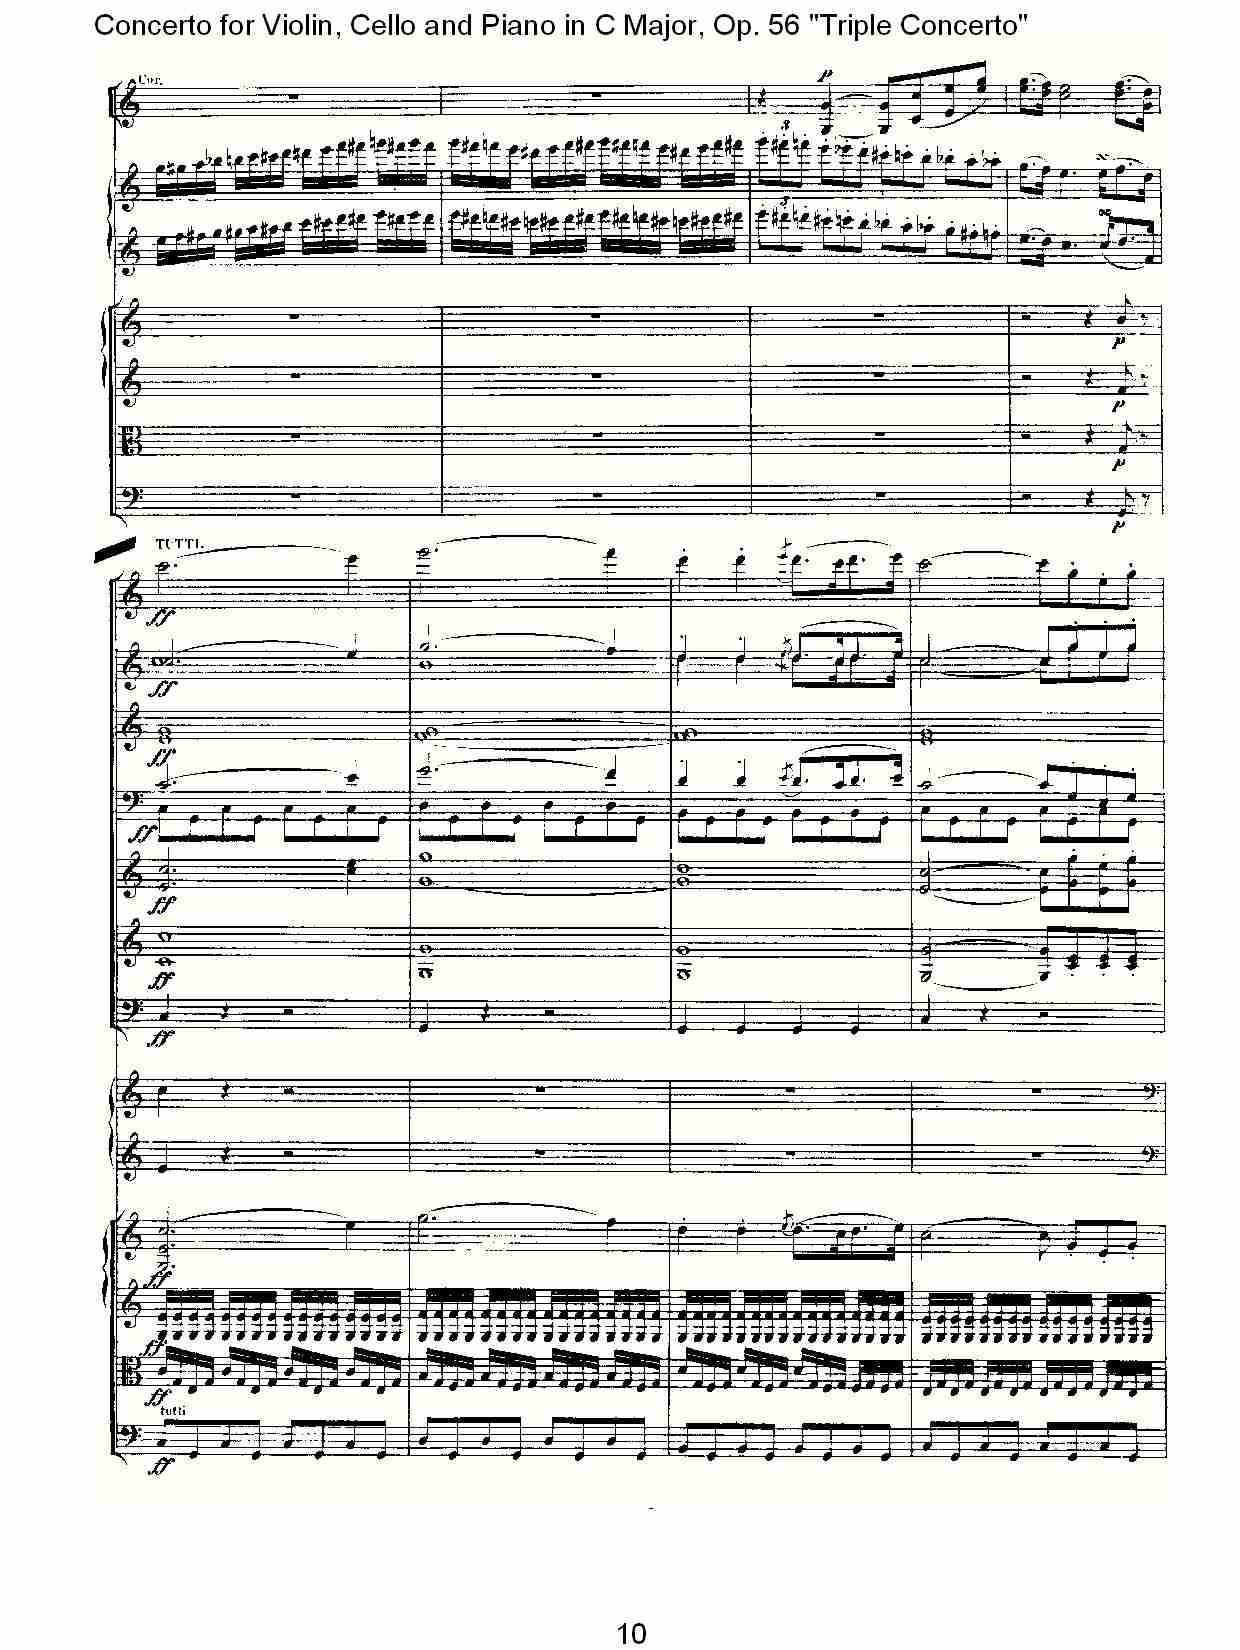 C大调大提琴与钢琴协奏曲 Op.56第一乐章(一)总谱（图10）